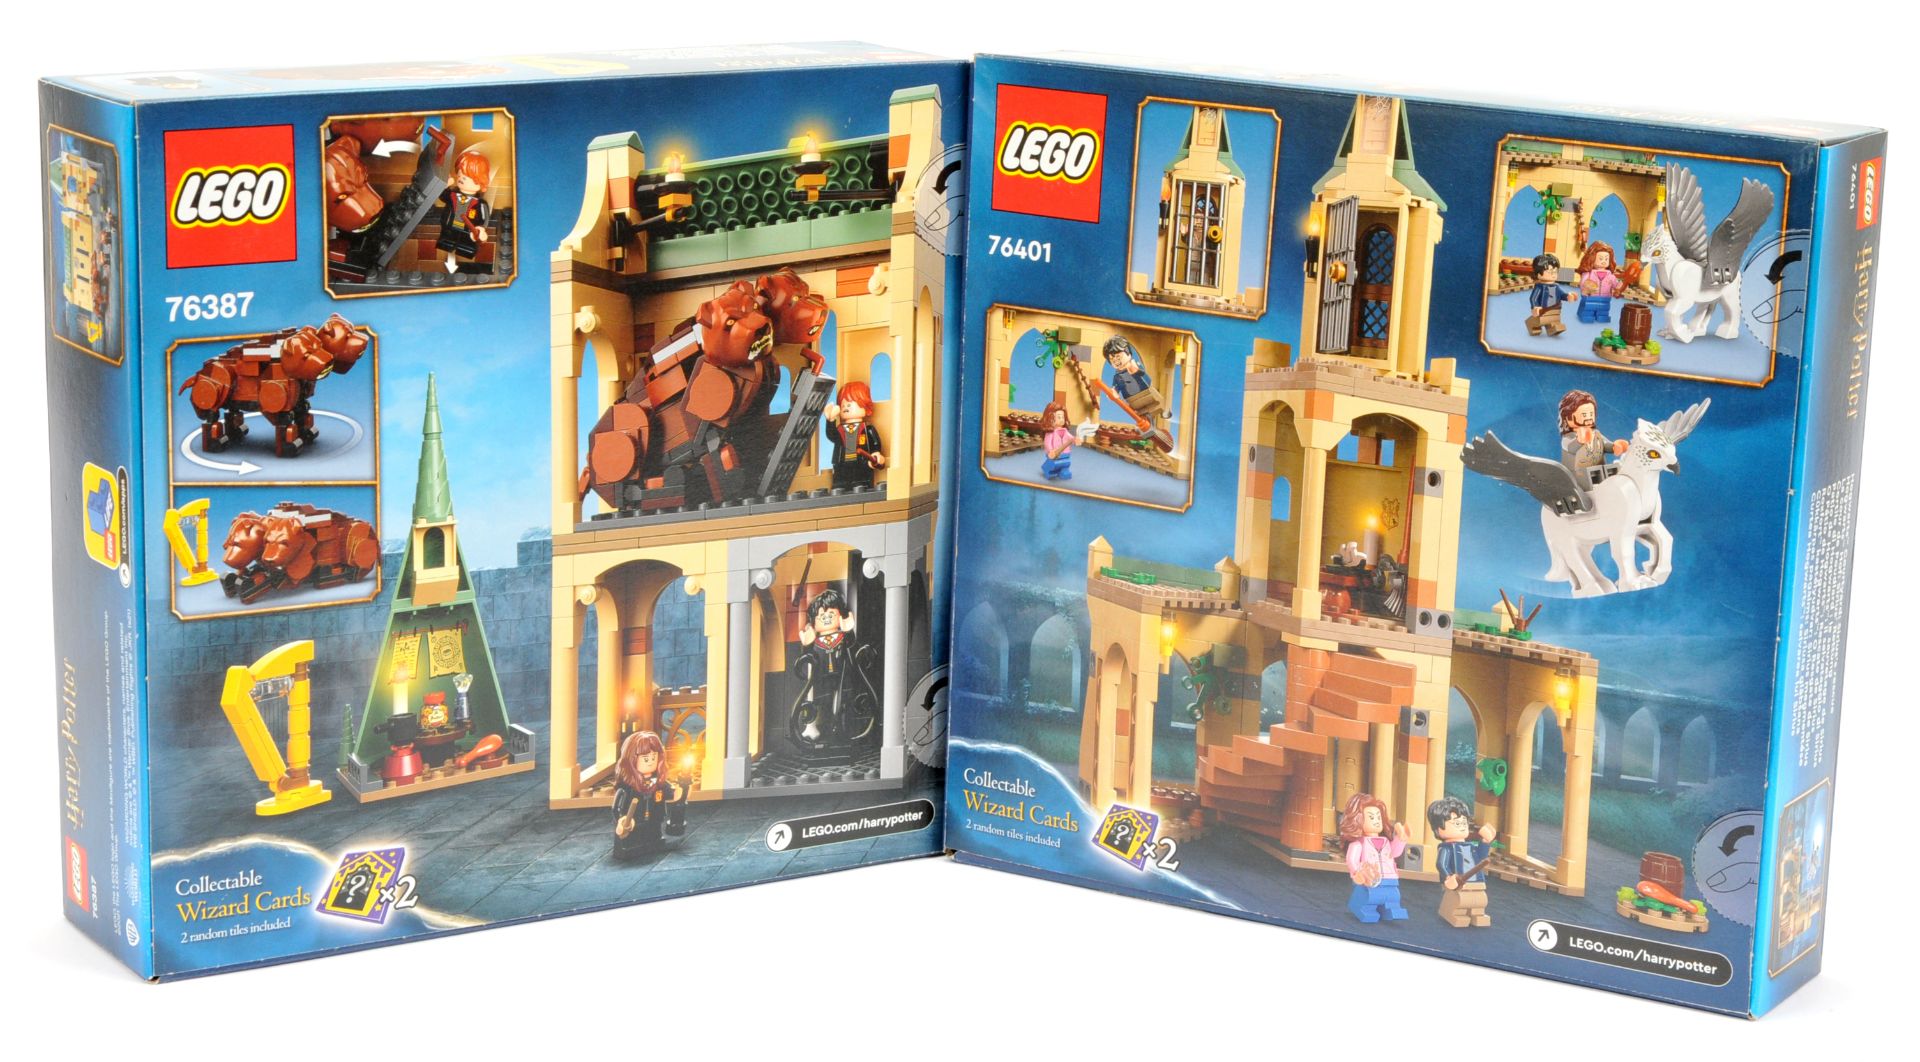 Lego Harry Potter boxed pair (1) 76401 Hogwarts Courtyard Sirius's Rescue; (2) 76387 Hogwarts Flu... - Image 2 of 2